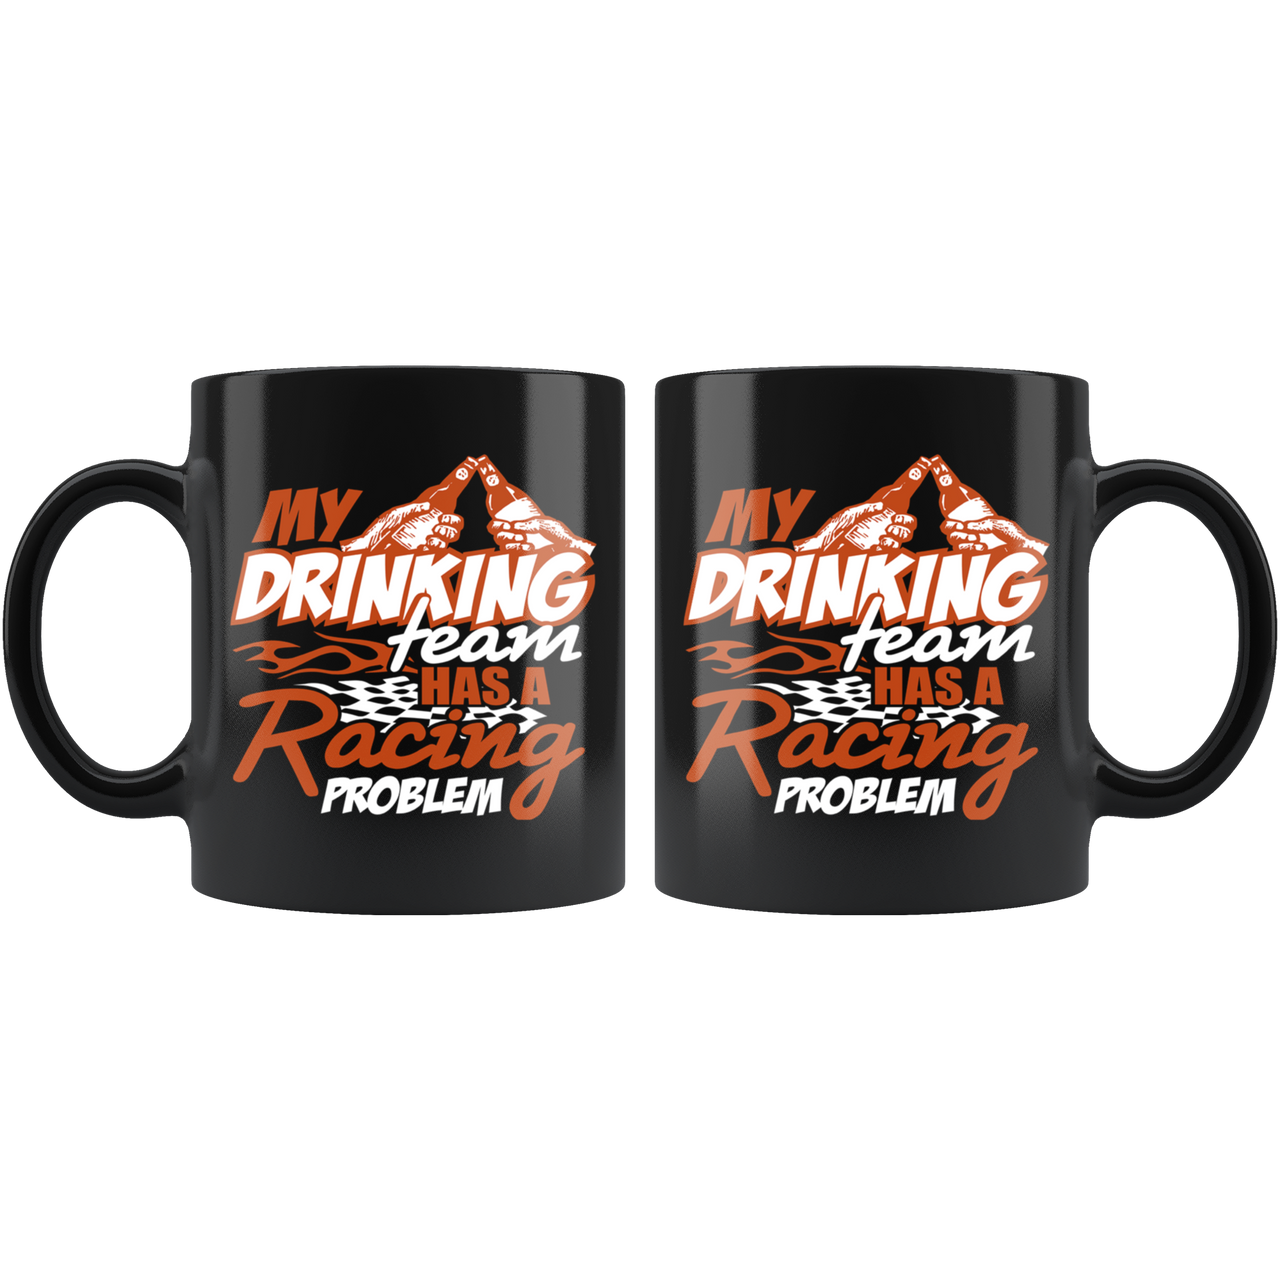 My Drinking Team Has A Racing Problem Mug!